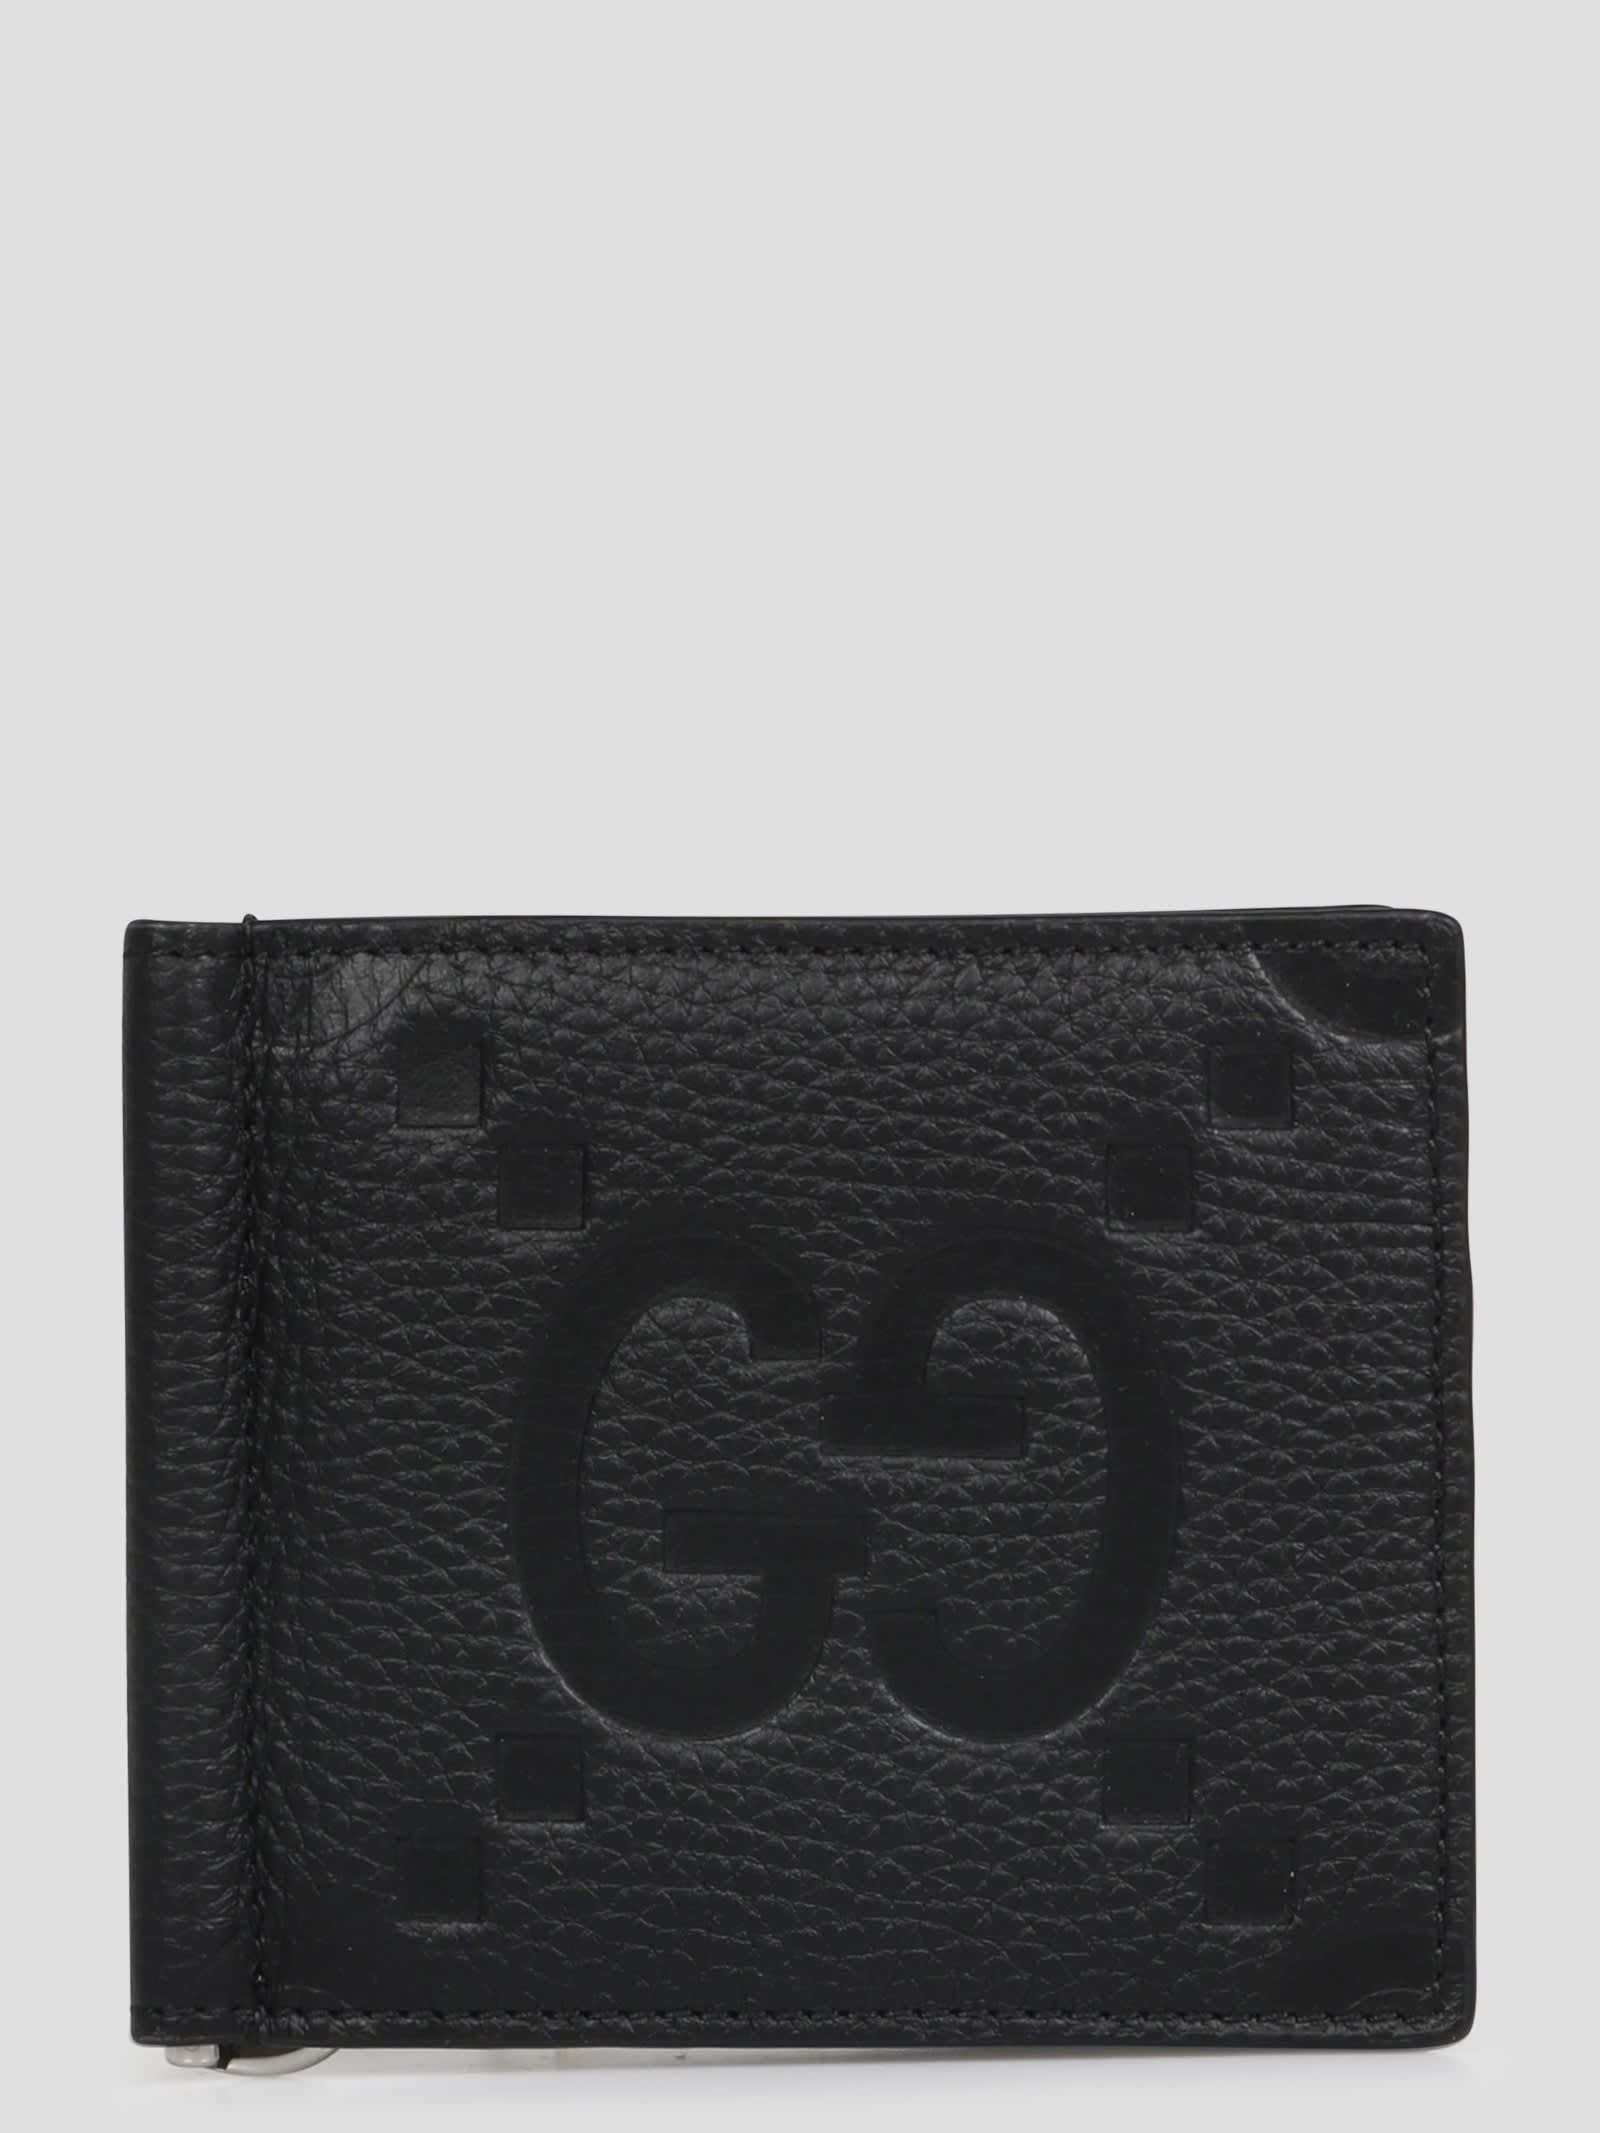 Gucci x Balenciaga The Hacker Project Bi-Fold Wallet Black